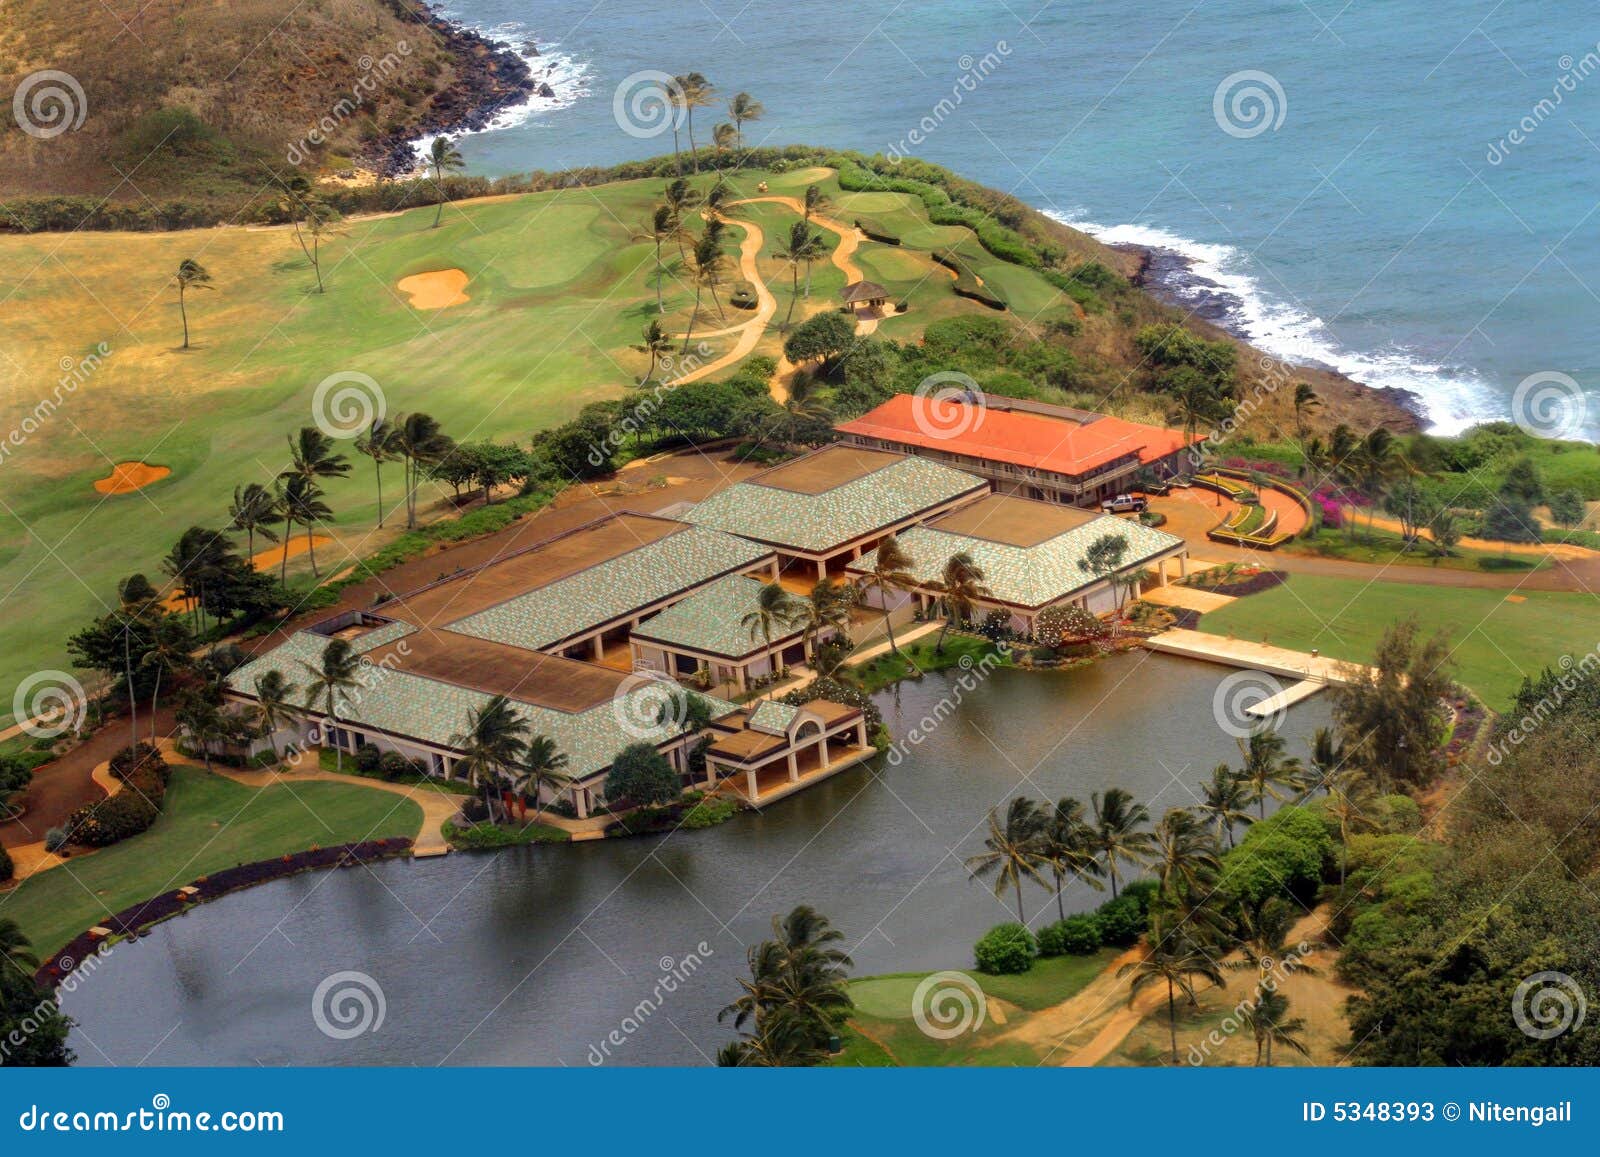 golf clubhouse in kauai